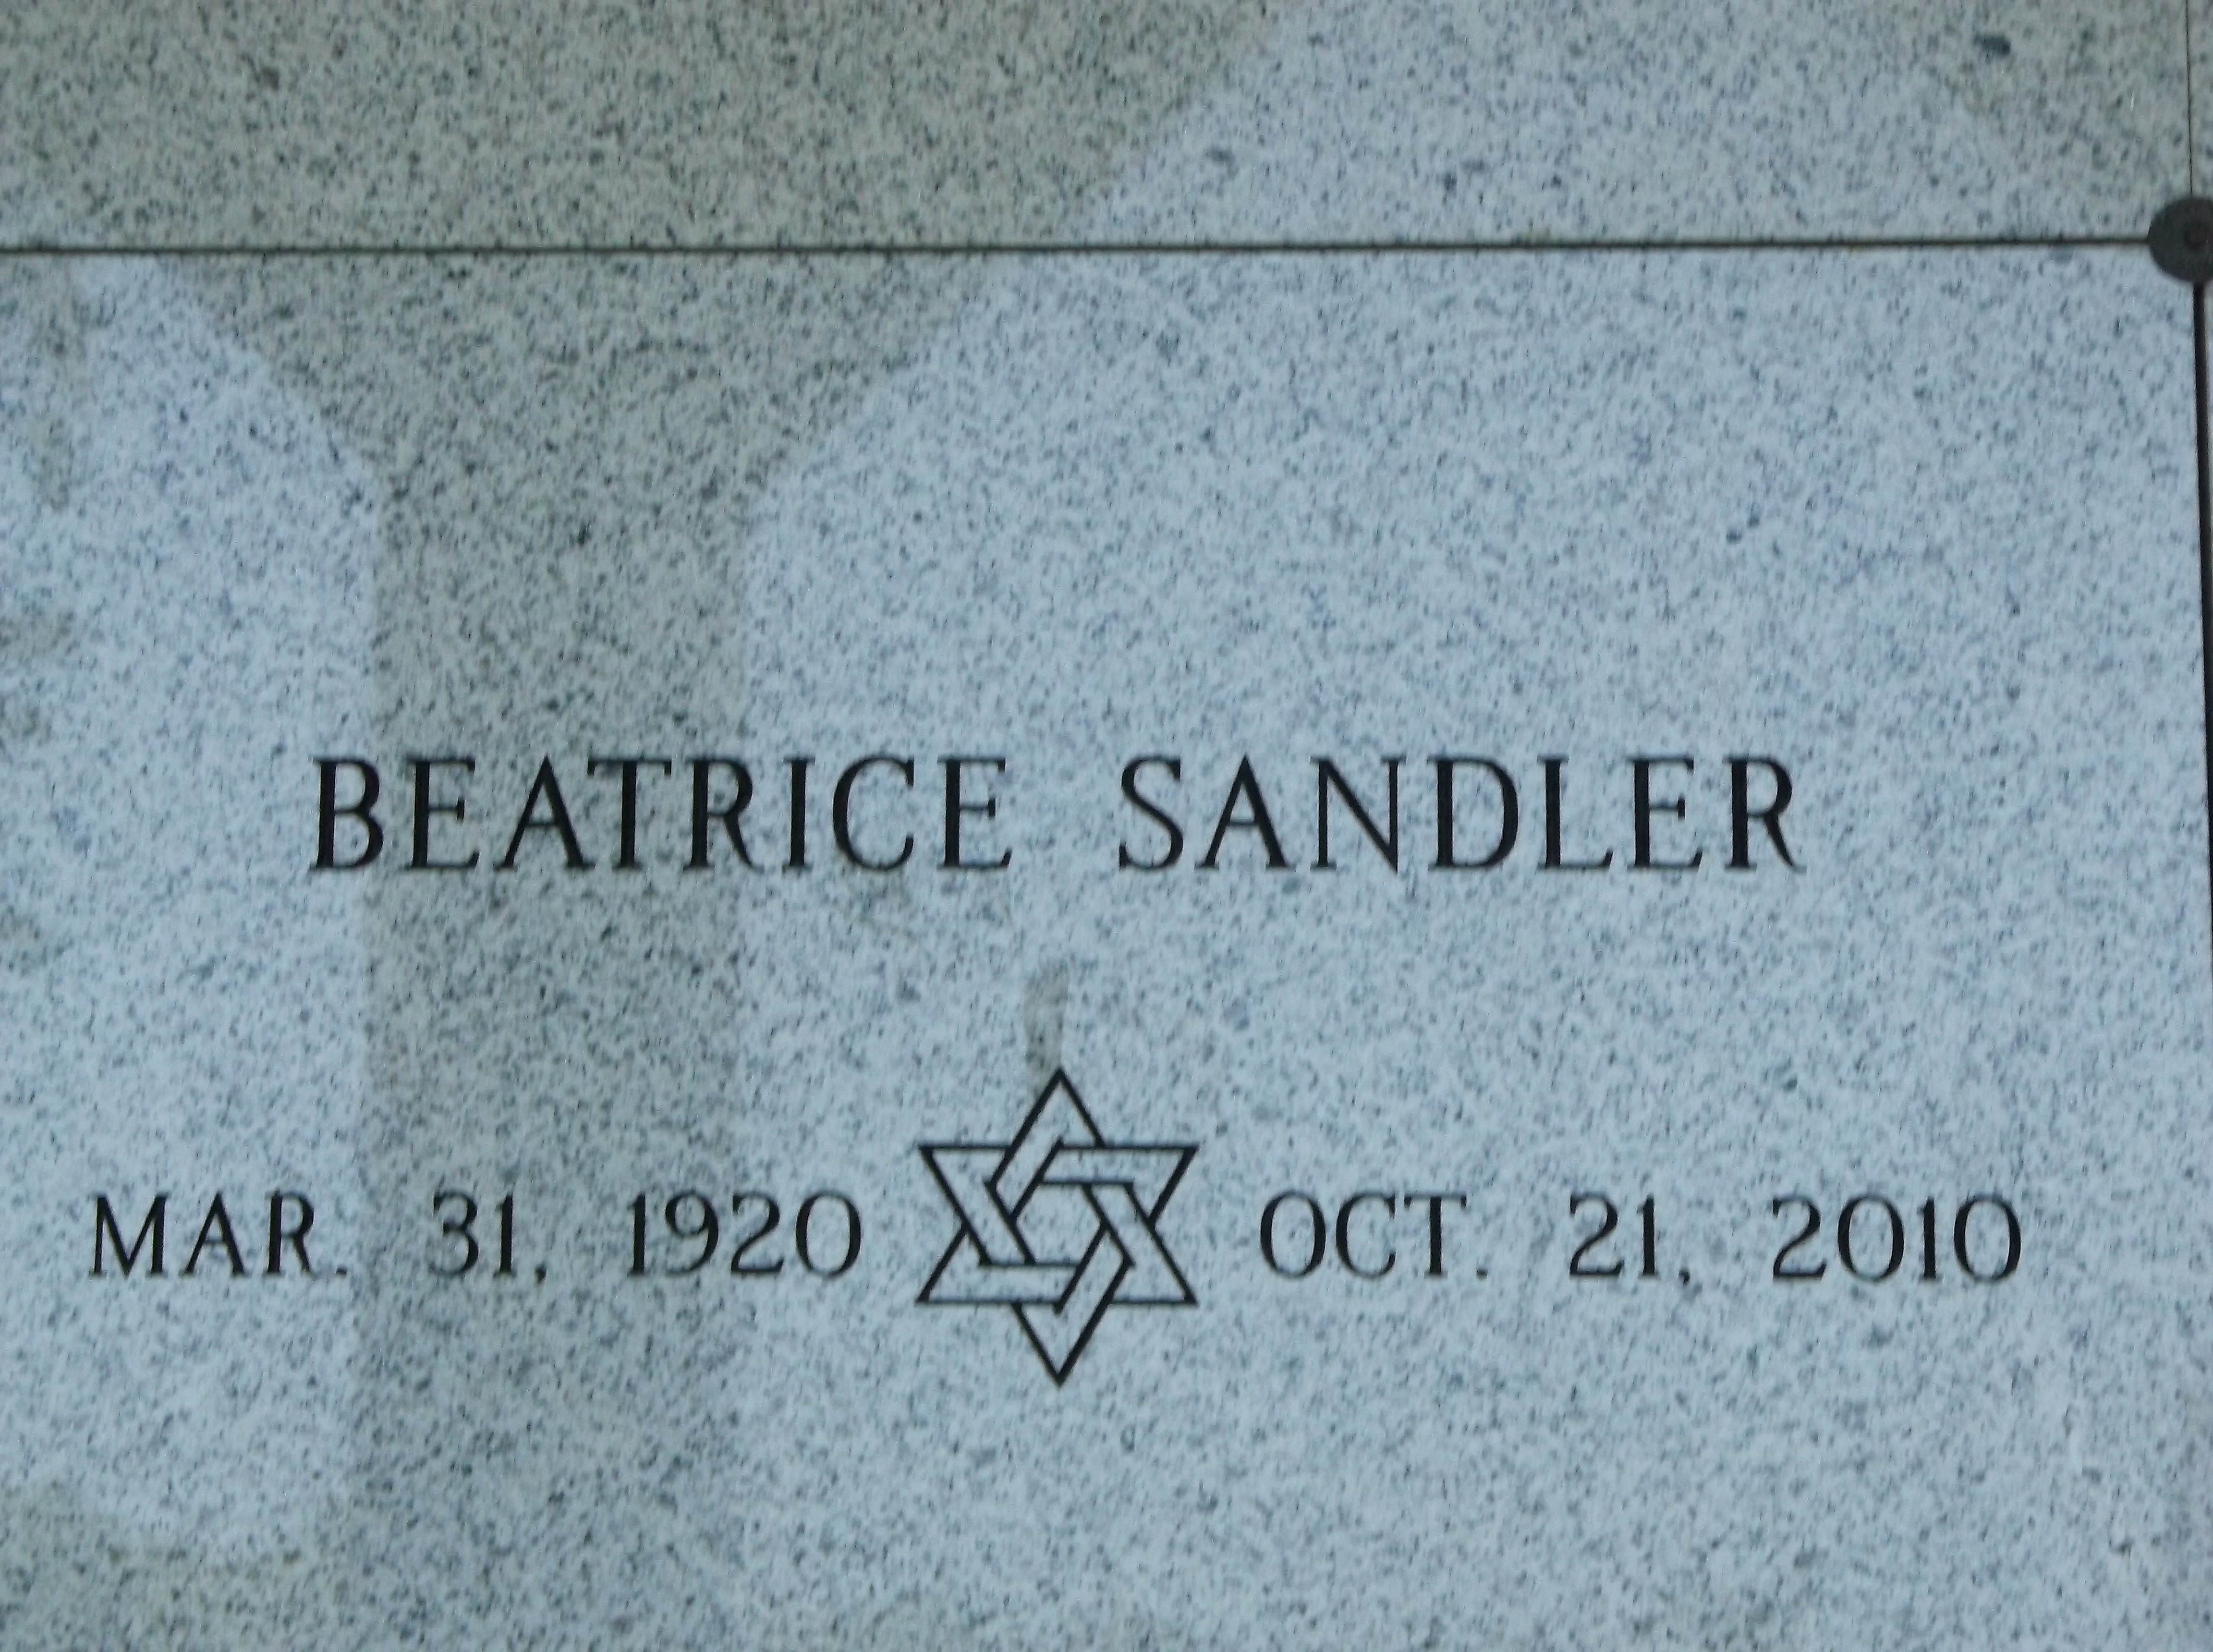 Beatrice Sandler